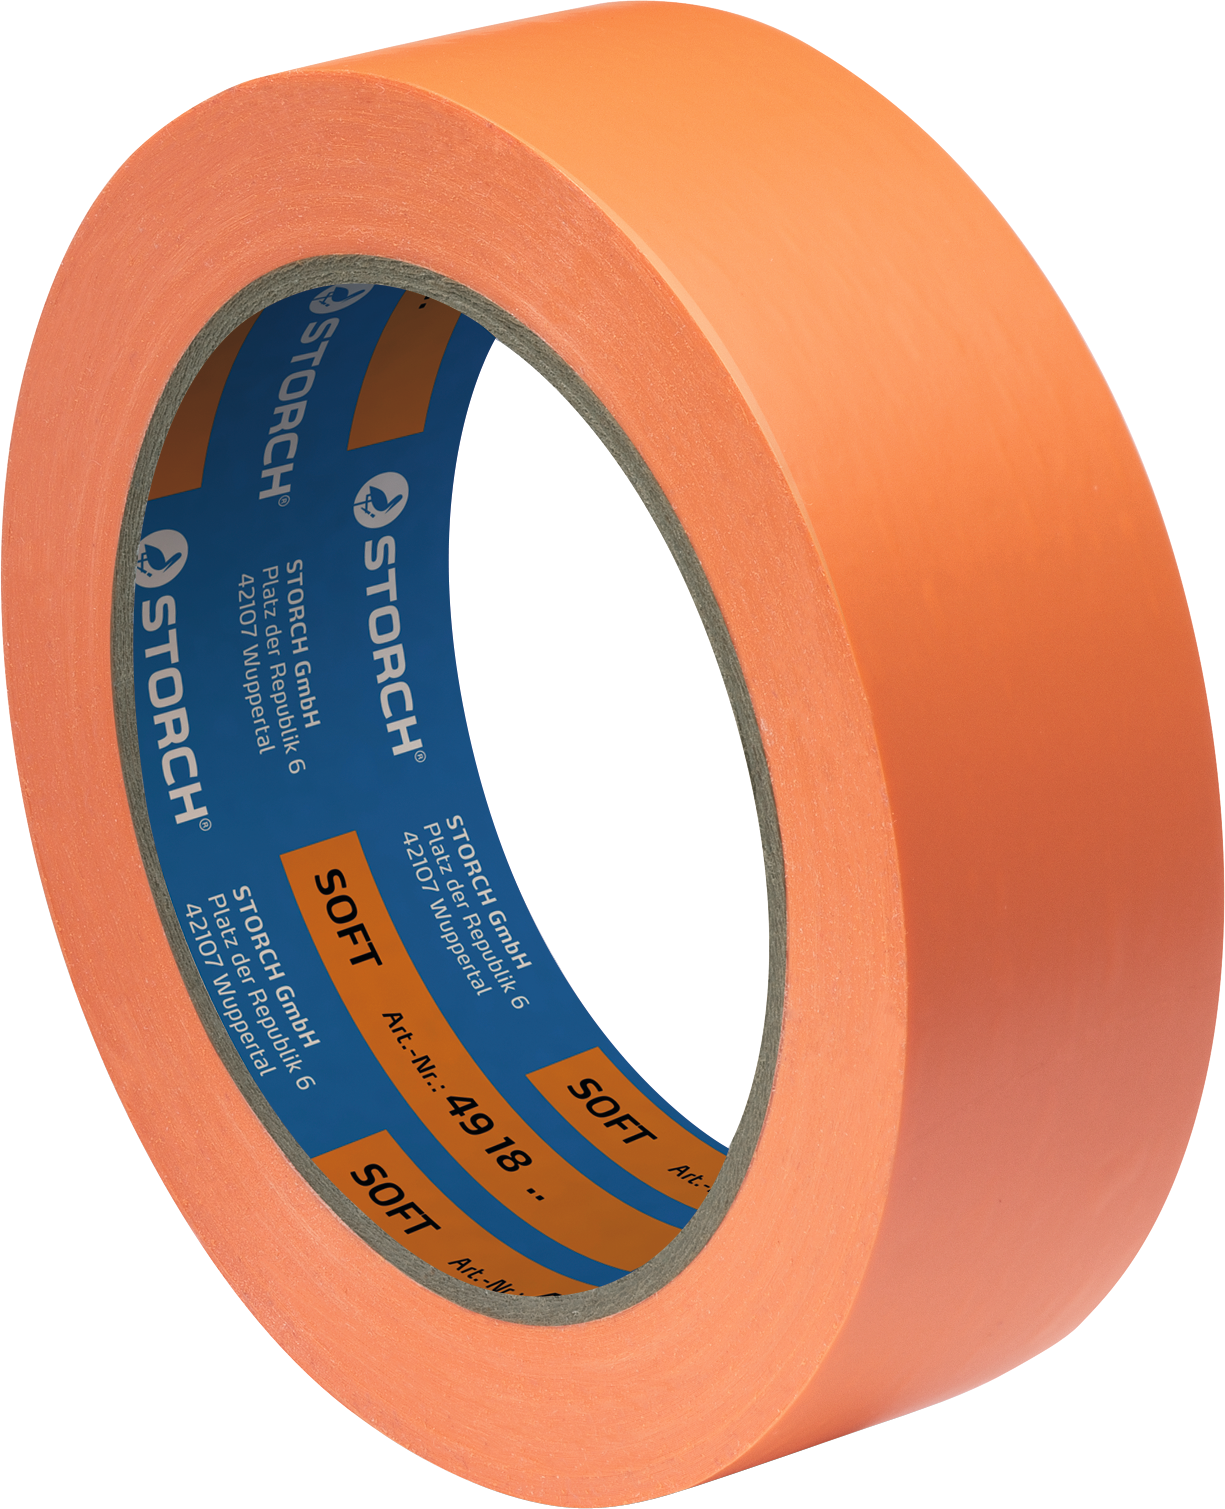 Superband orange L33m B30mm